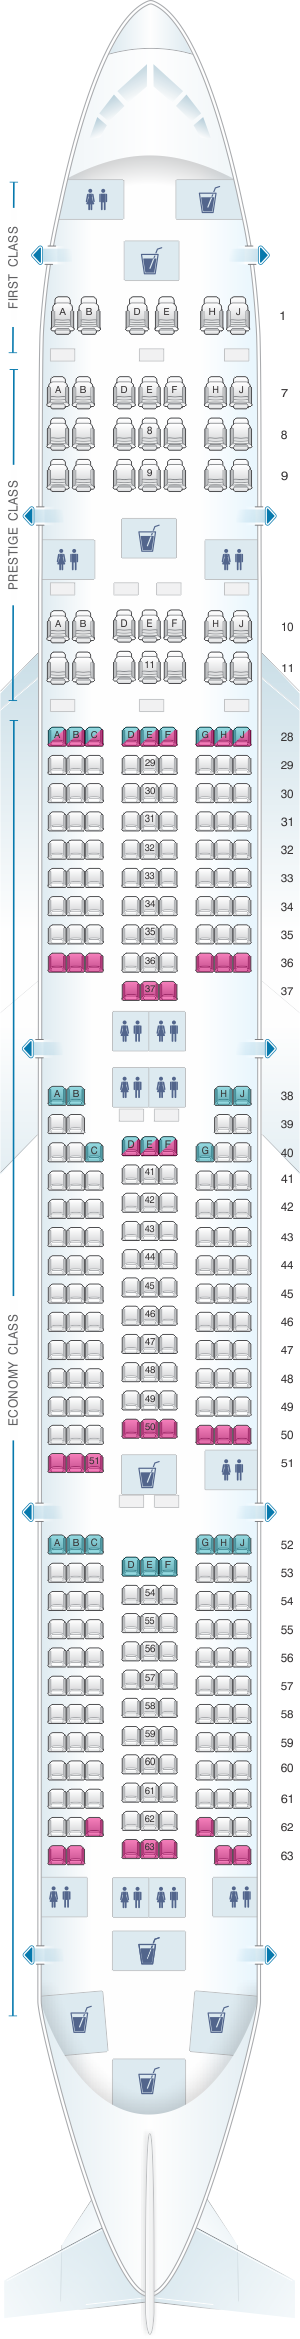 Seat map for Korean Air Boeing B777 300 338PAX